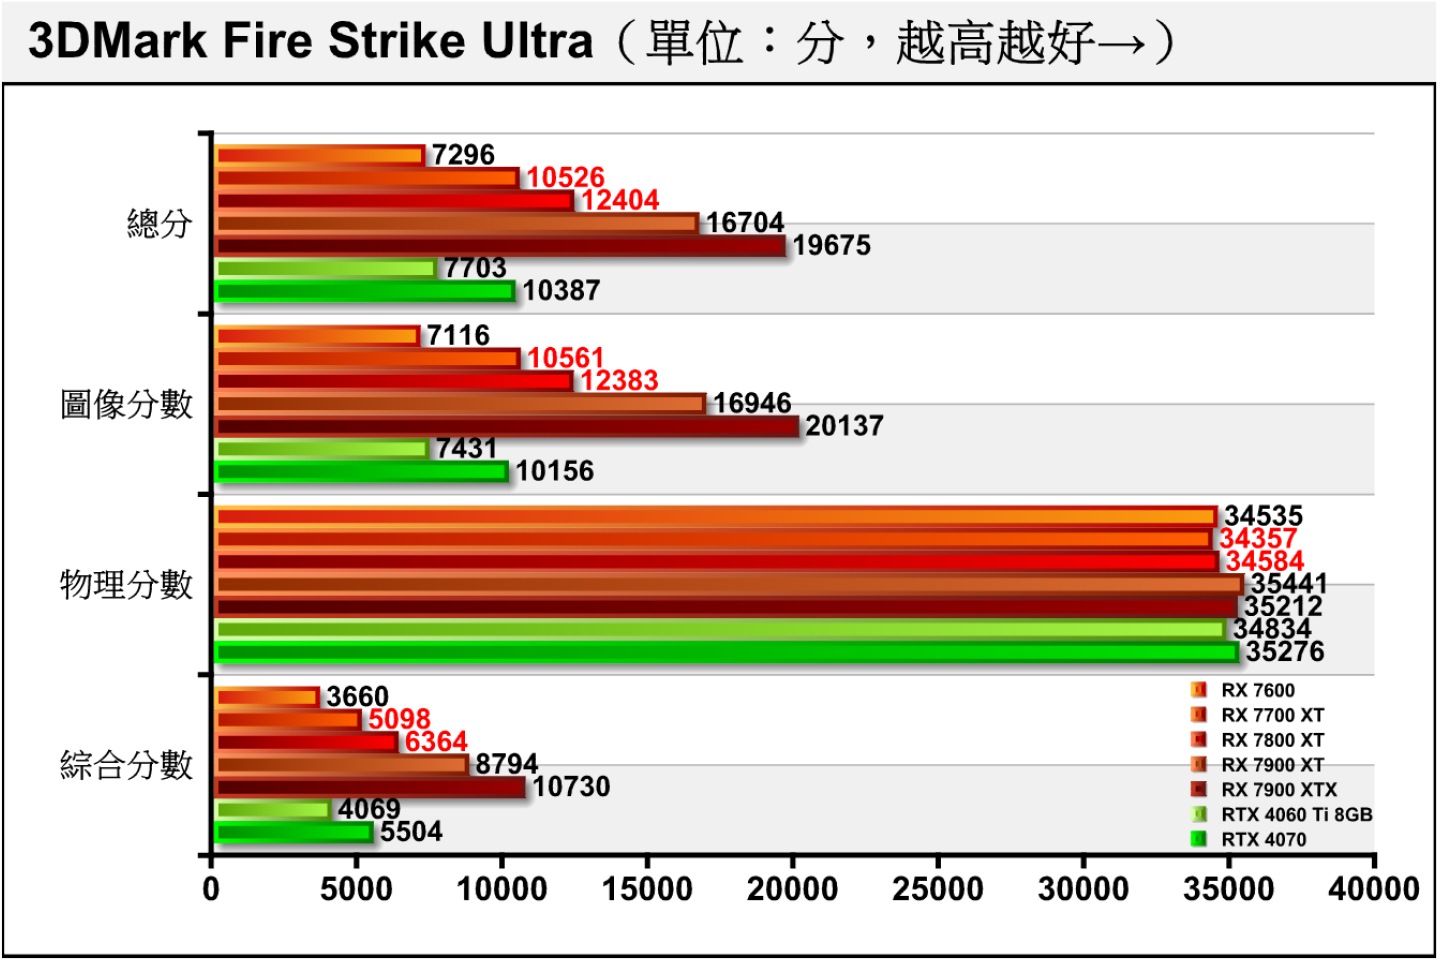 Fire Strike Ultra進一將解析度提升至4K（3840 x 2160），這時圖像分數2者的領先幅度為21.93%、42.11%，都有更出色的性價比表現。